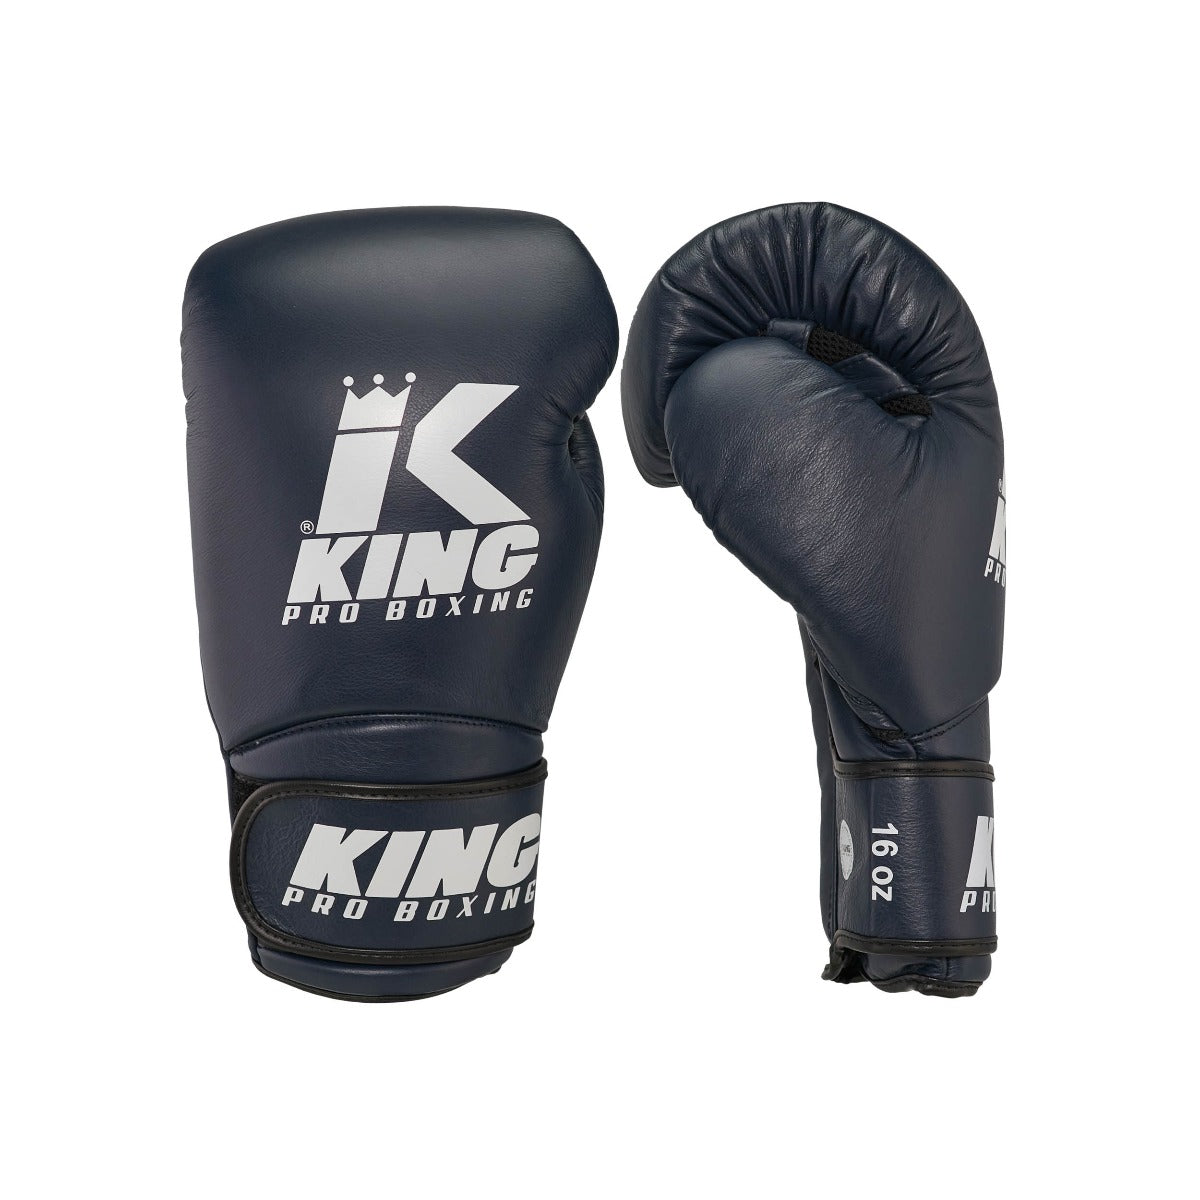 King PRO boxing boxing gloves - STAR MESH 7